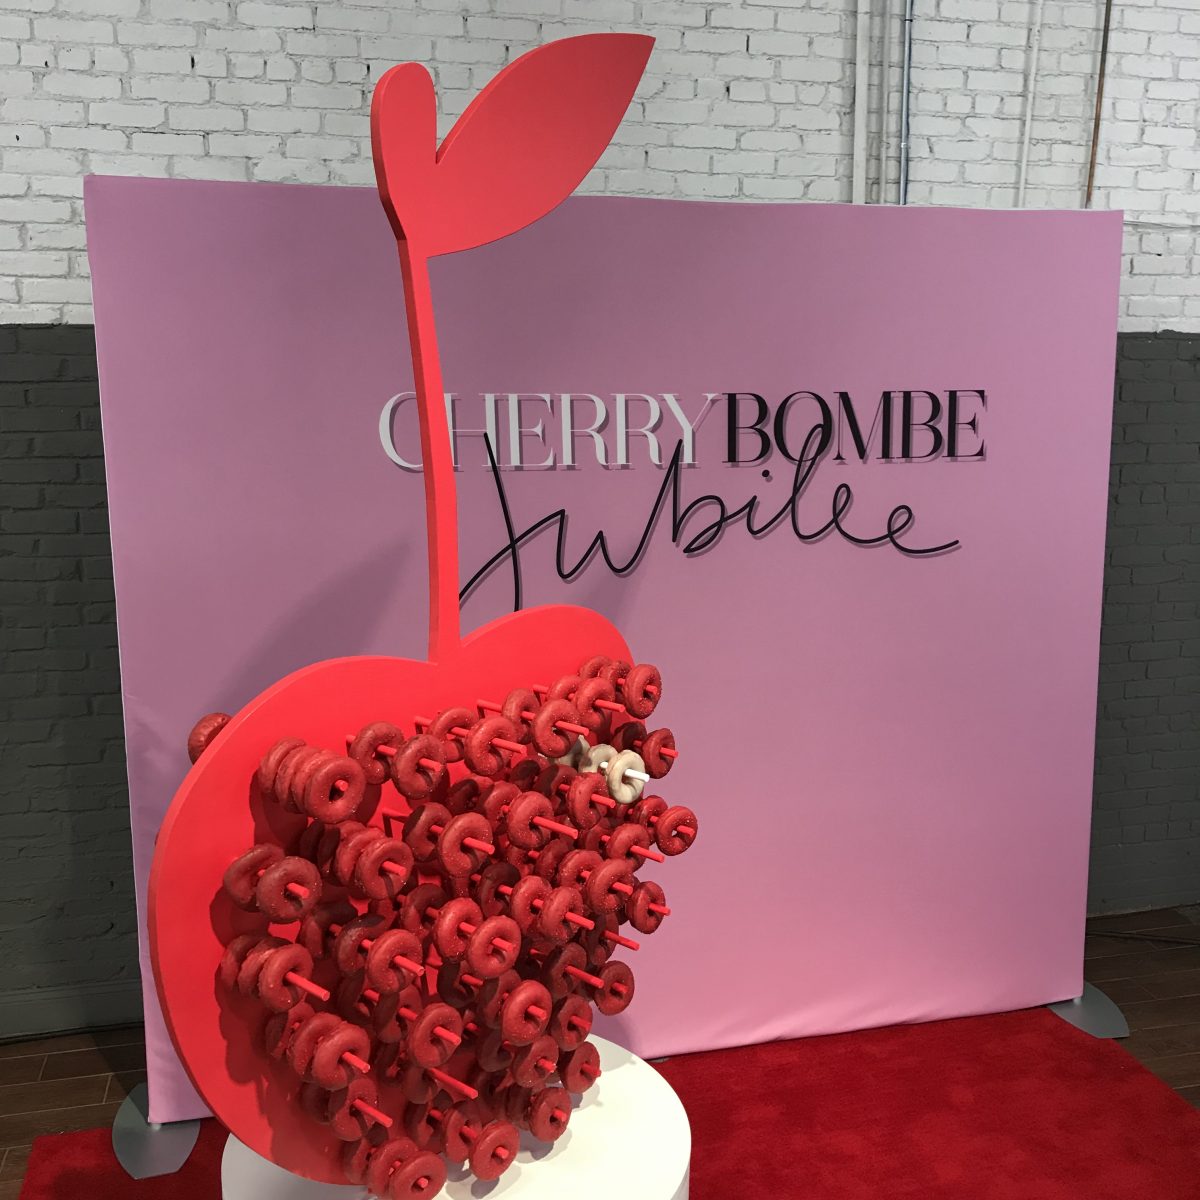 Cherry Bombe Jubilee